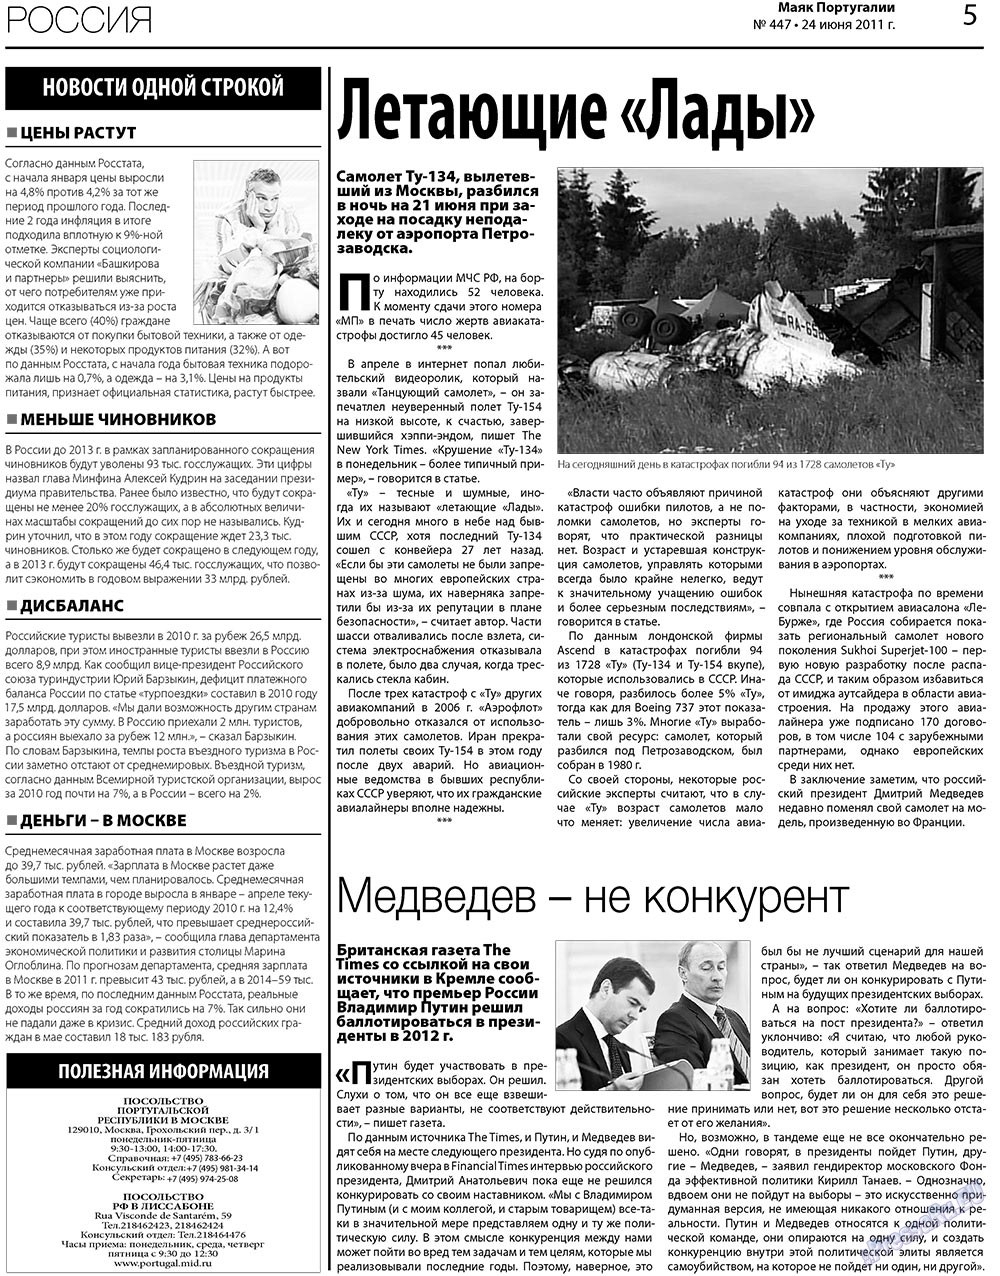 Маяк Португалии, газета. 2011 №447 стр.5